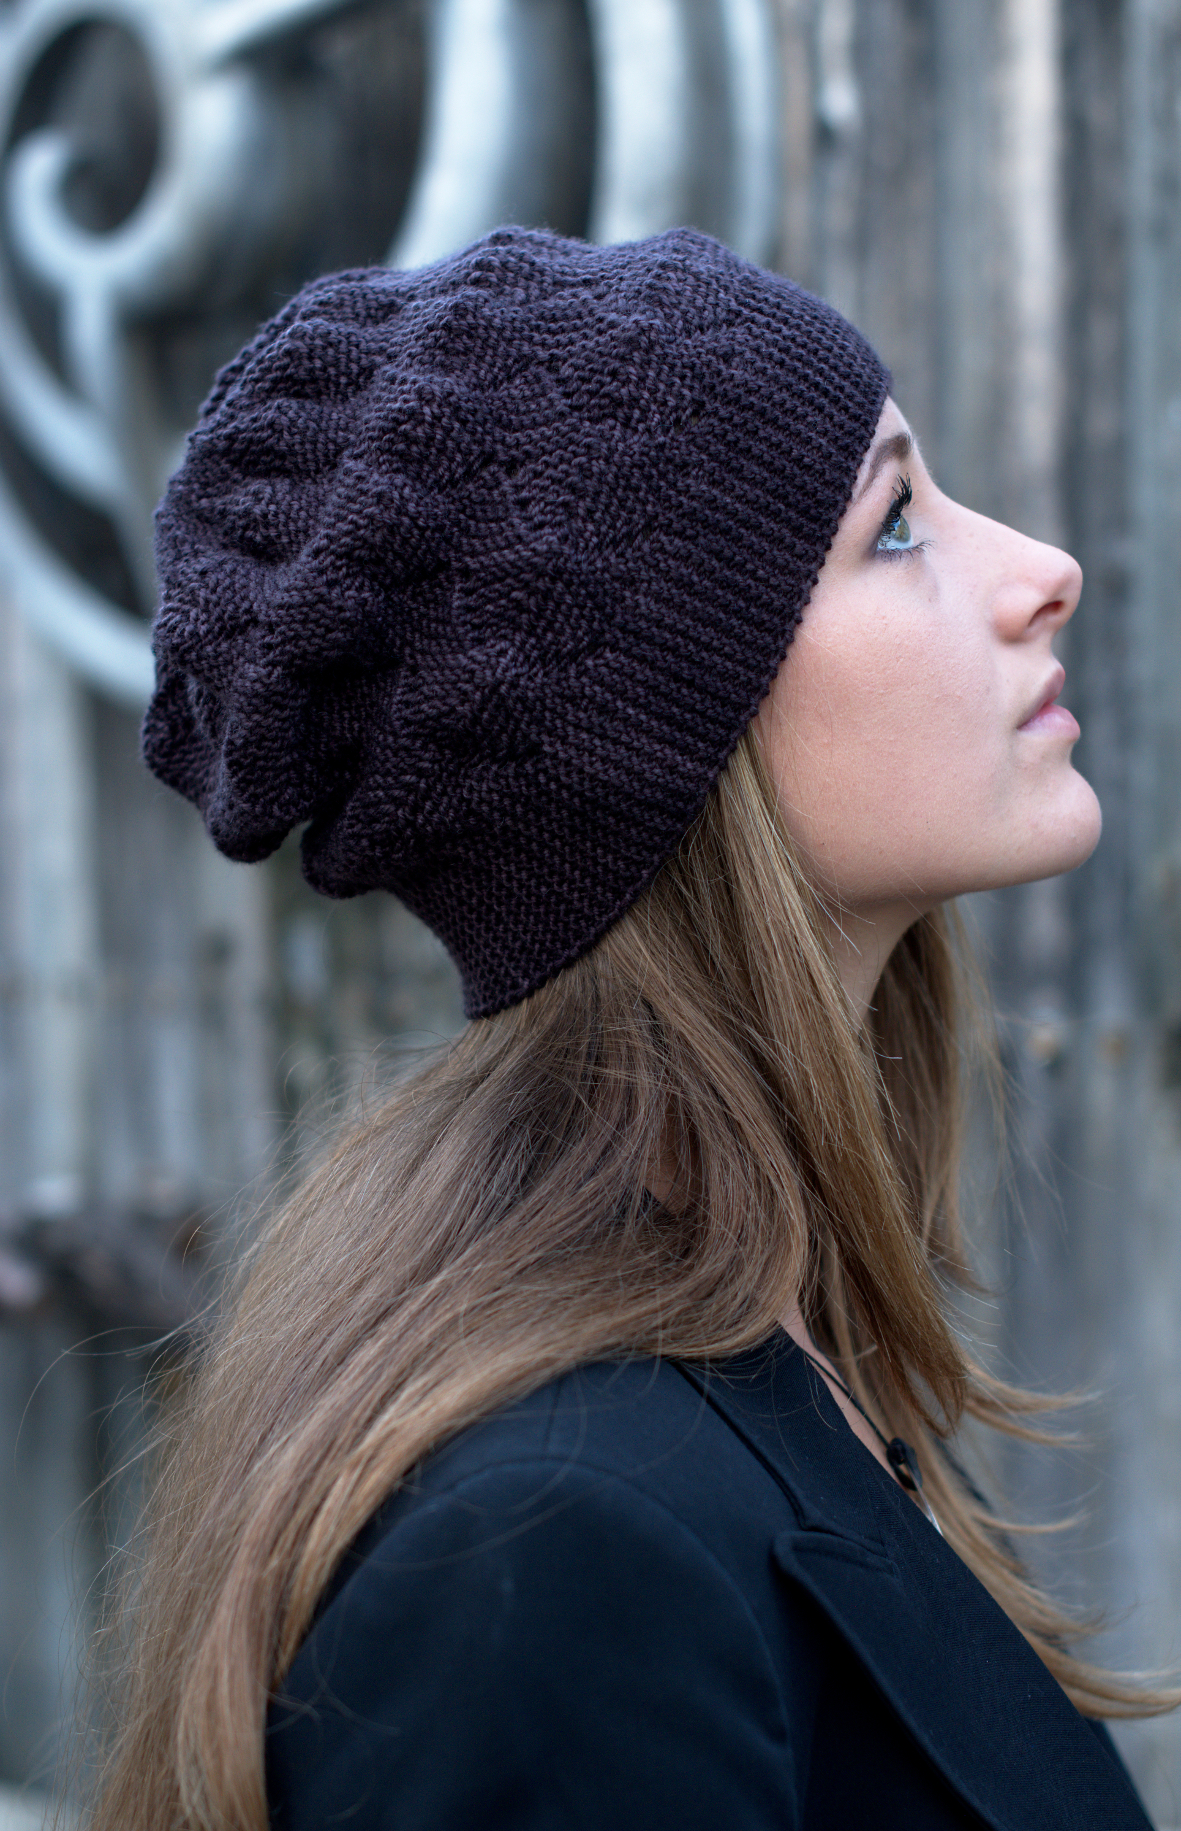 Sagitta sideways knit textured Hat knitting pattern